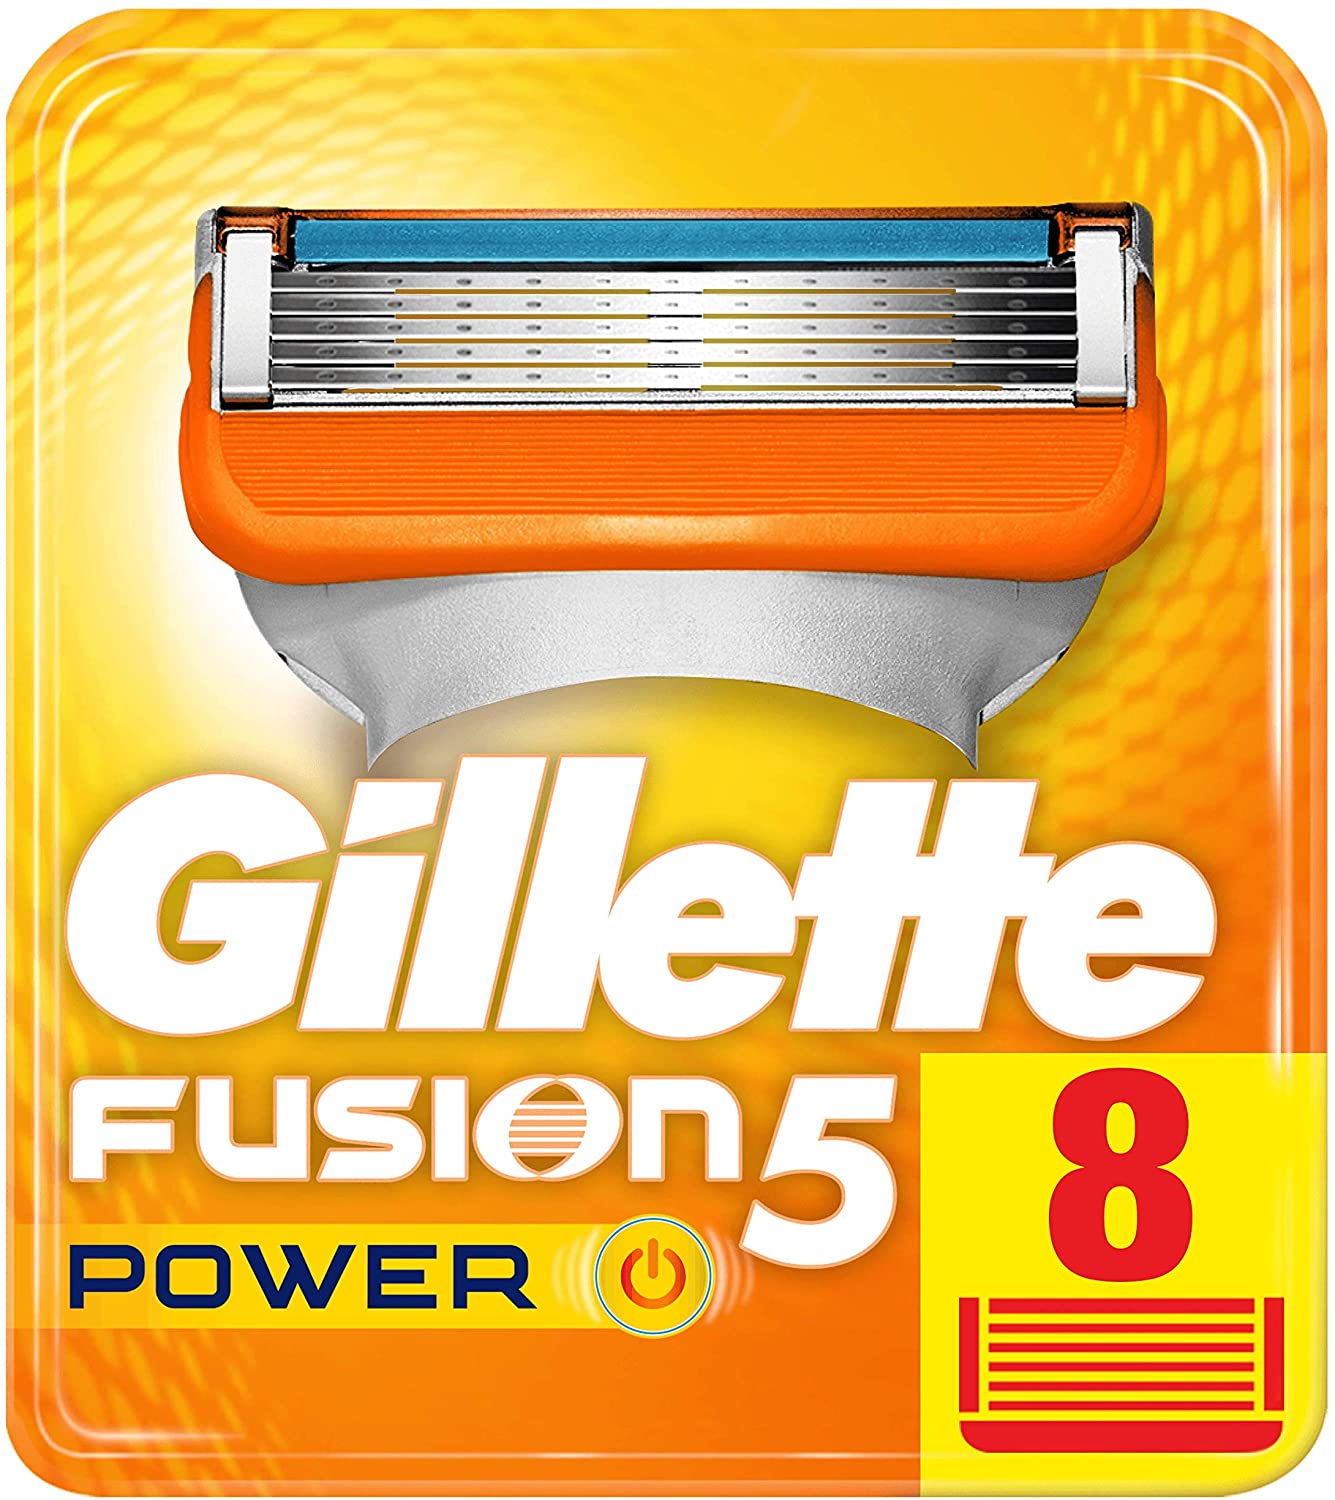 Gillette Fusion5 Power Razor Blades 8 Refills